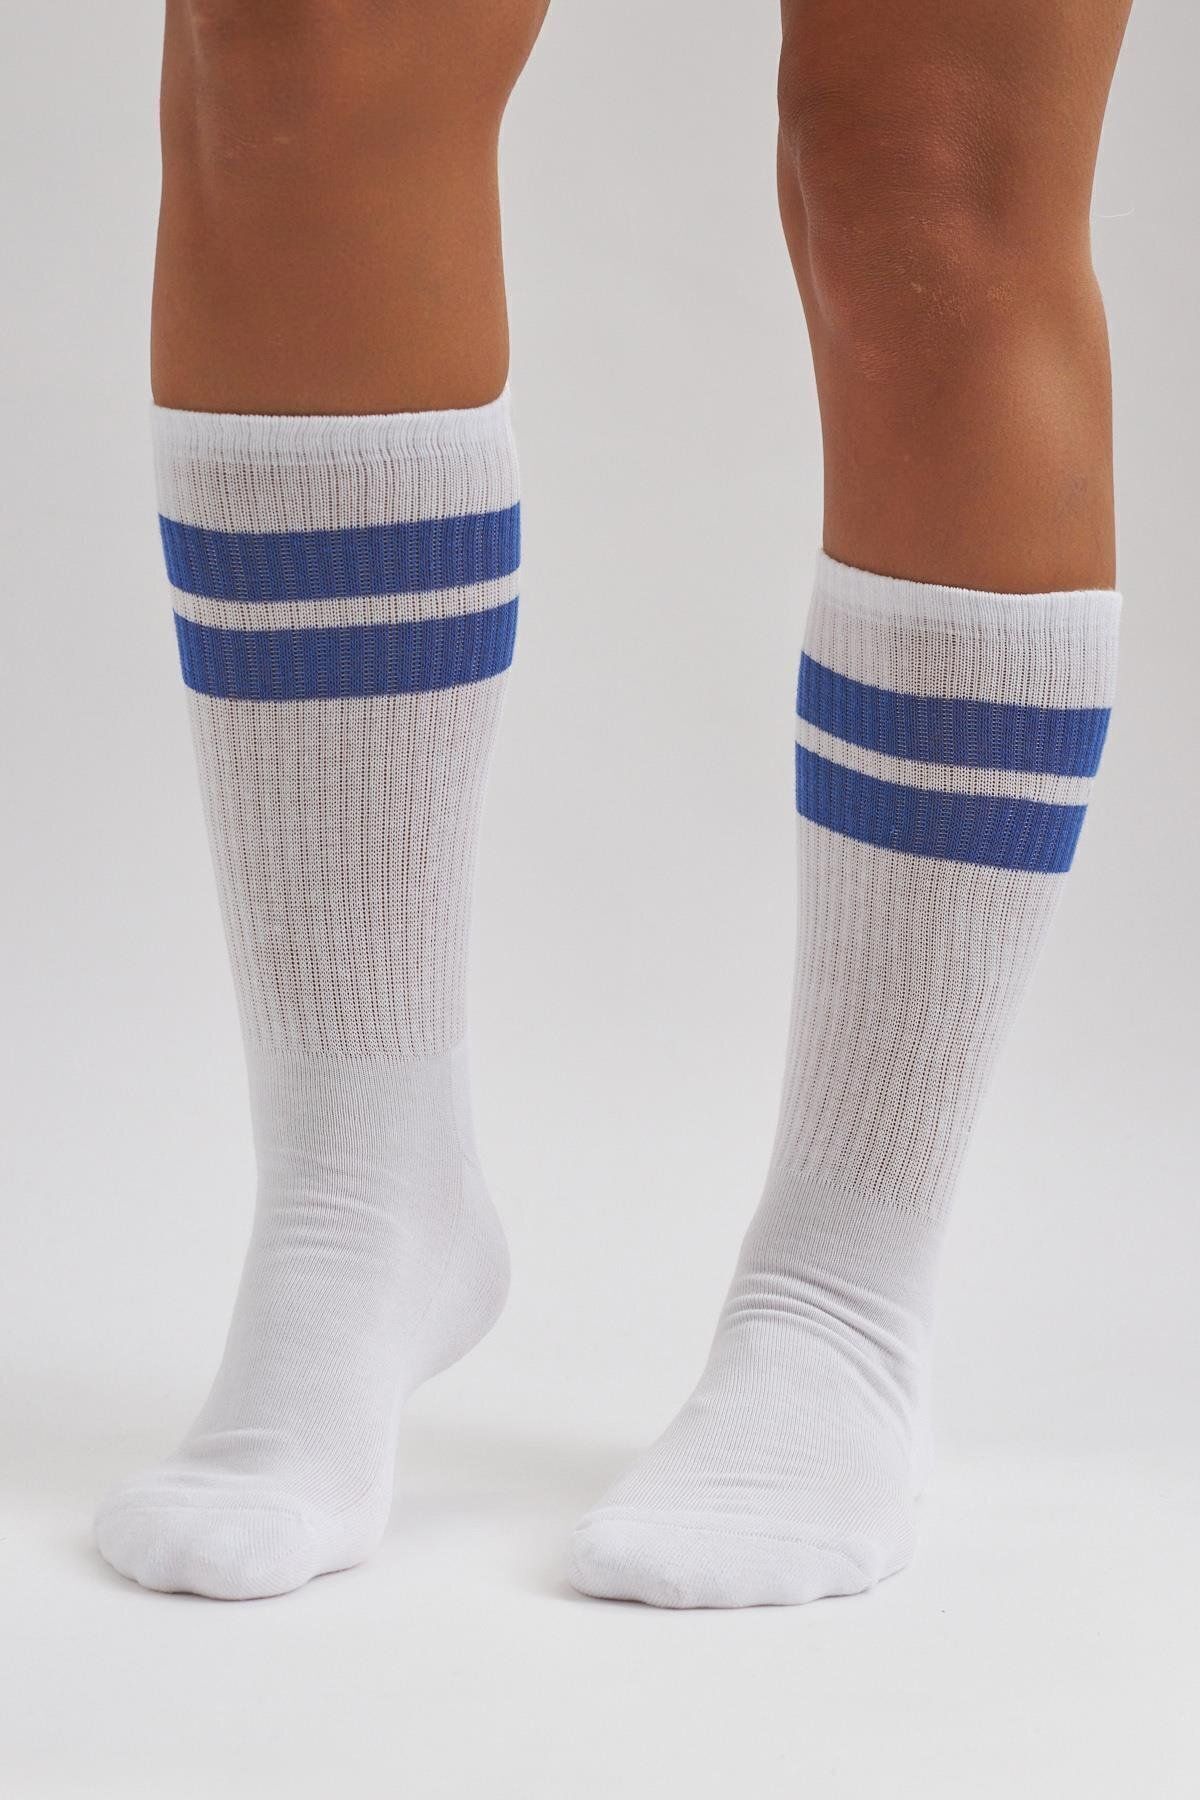 Katia & Bony Erkek Havlu Taban Çizgili Soket Çorap Lacivert/beyaz